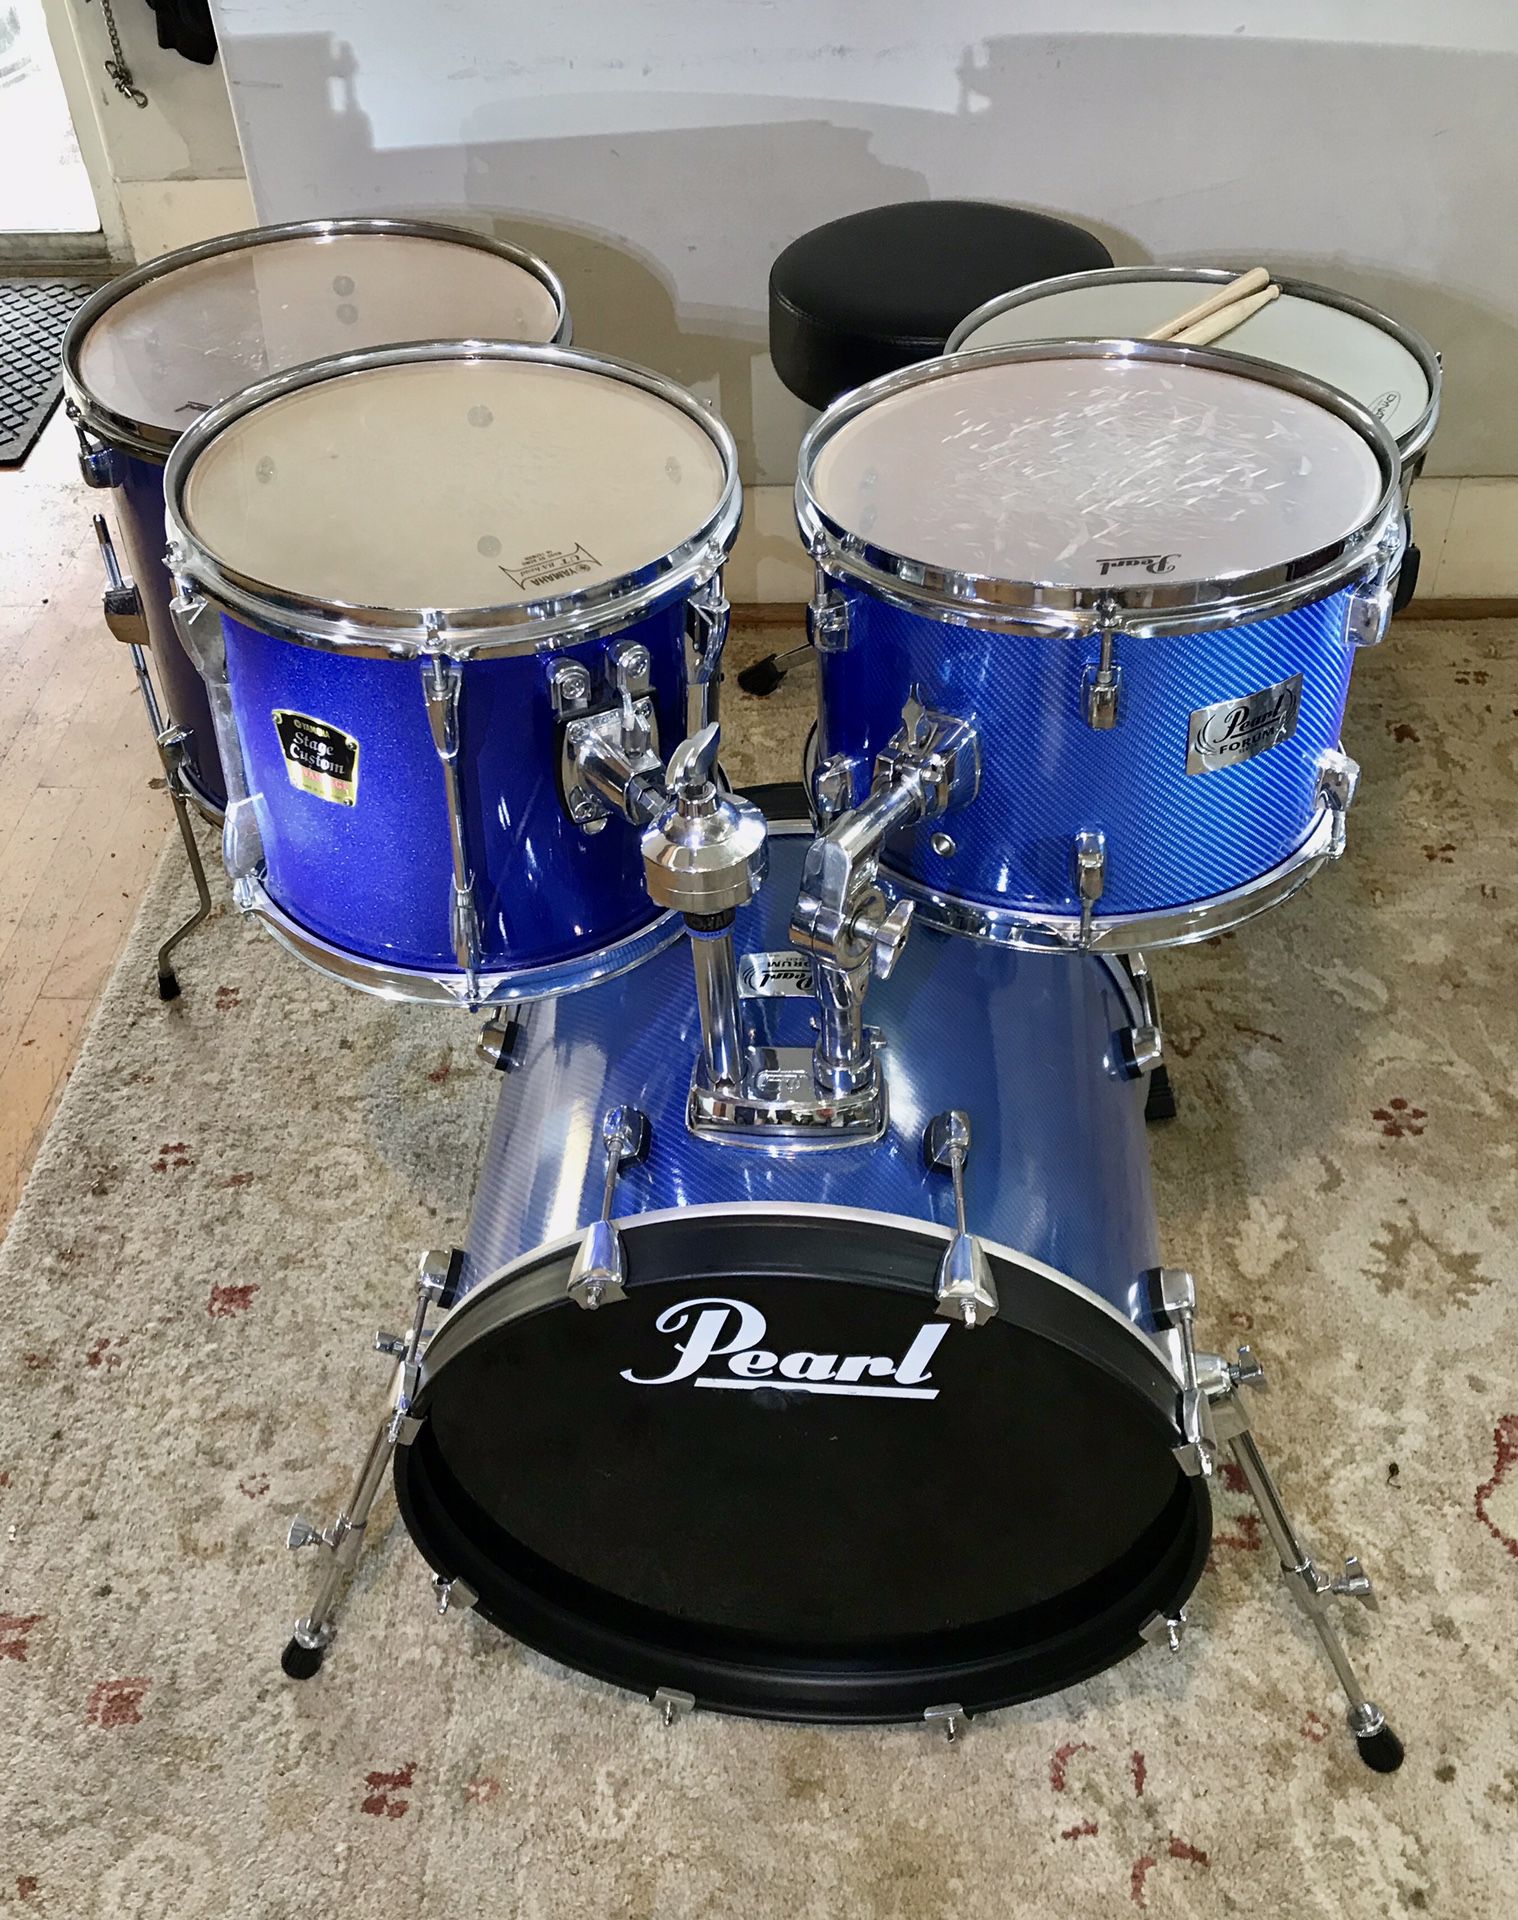 Pearl forum blue carbon fiber wrap bebop drum set Yamaha stage custom advantage 12” ride tom PDP throne pearl pedal 20” bass drum. $275 in Ontario 91